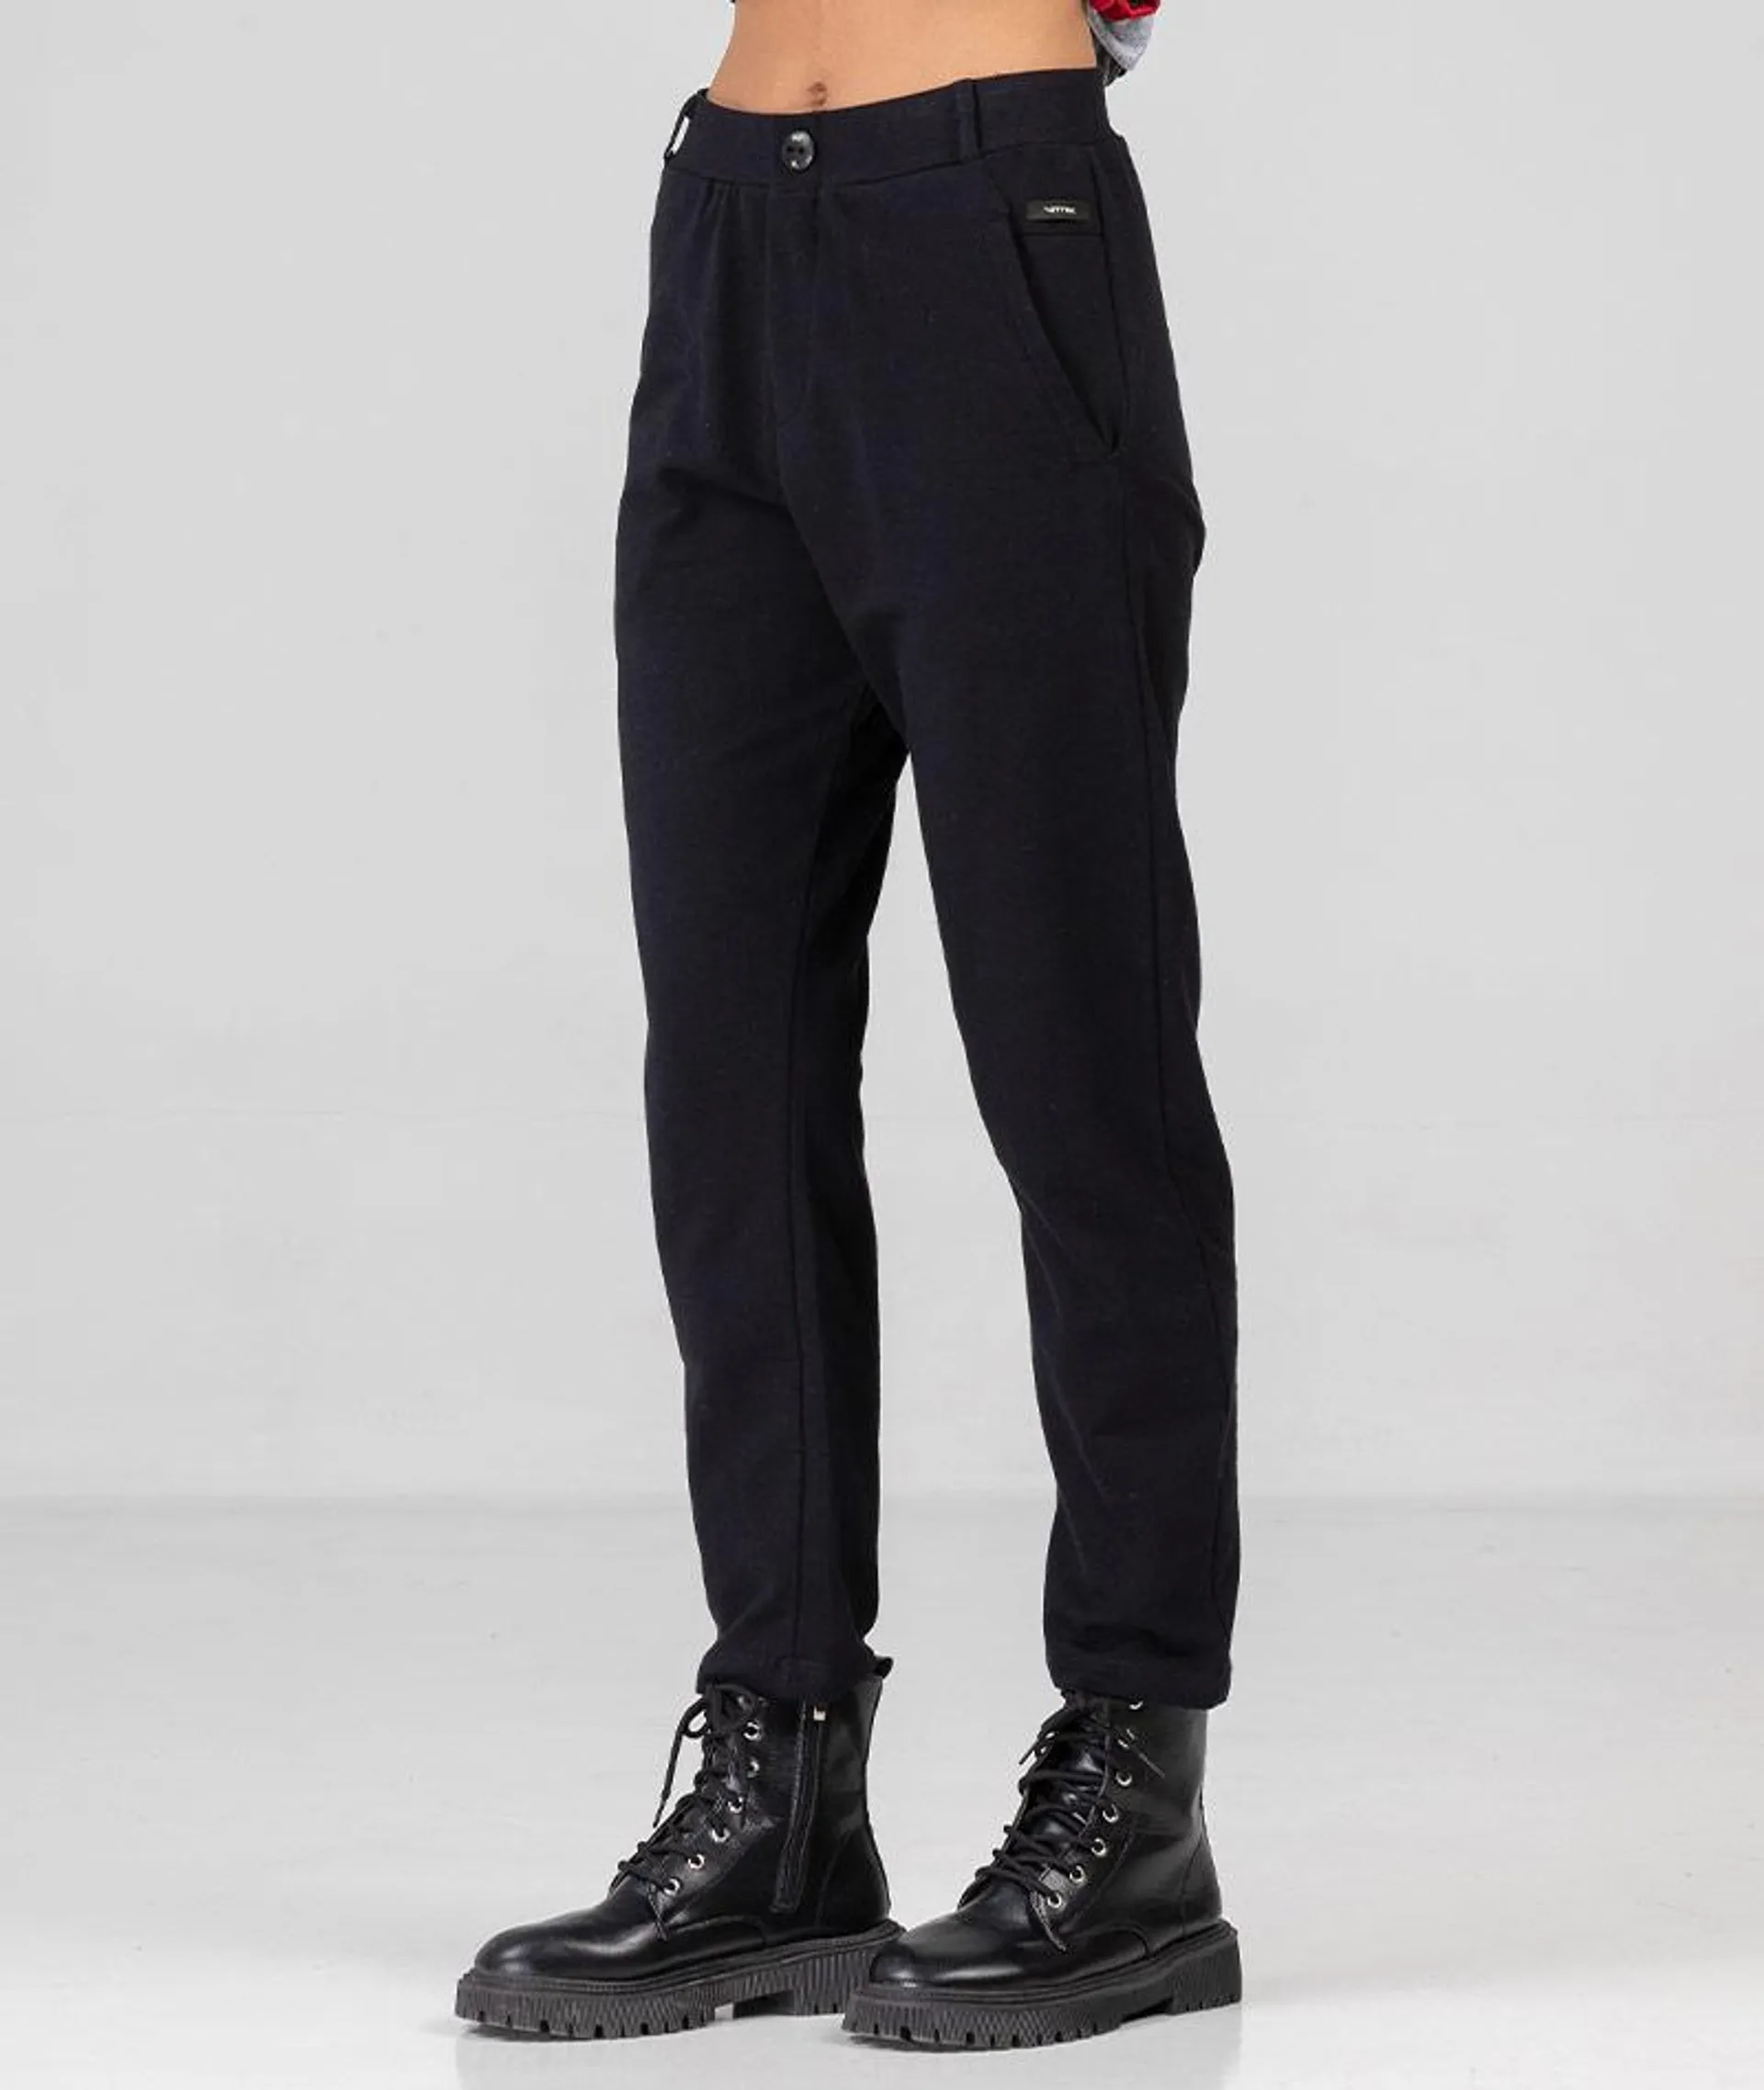 Pantalón slouchy algodón rústico liviano corte jean